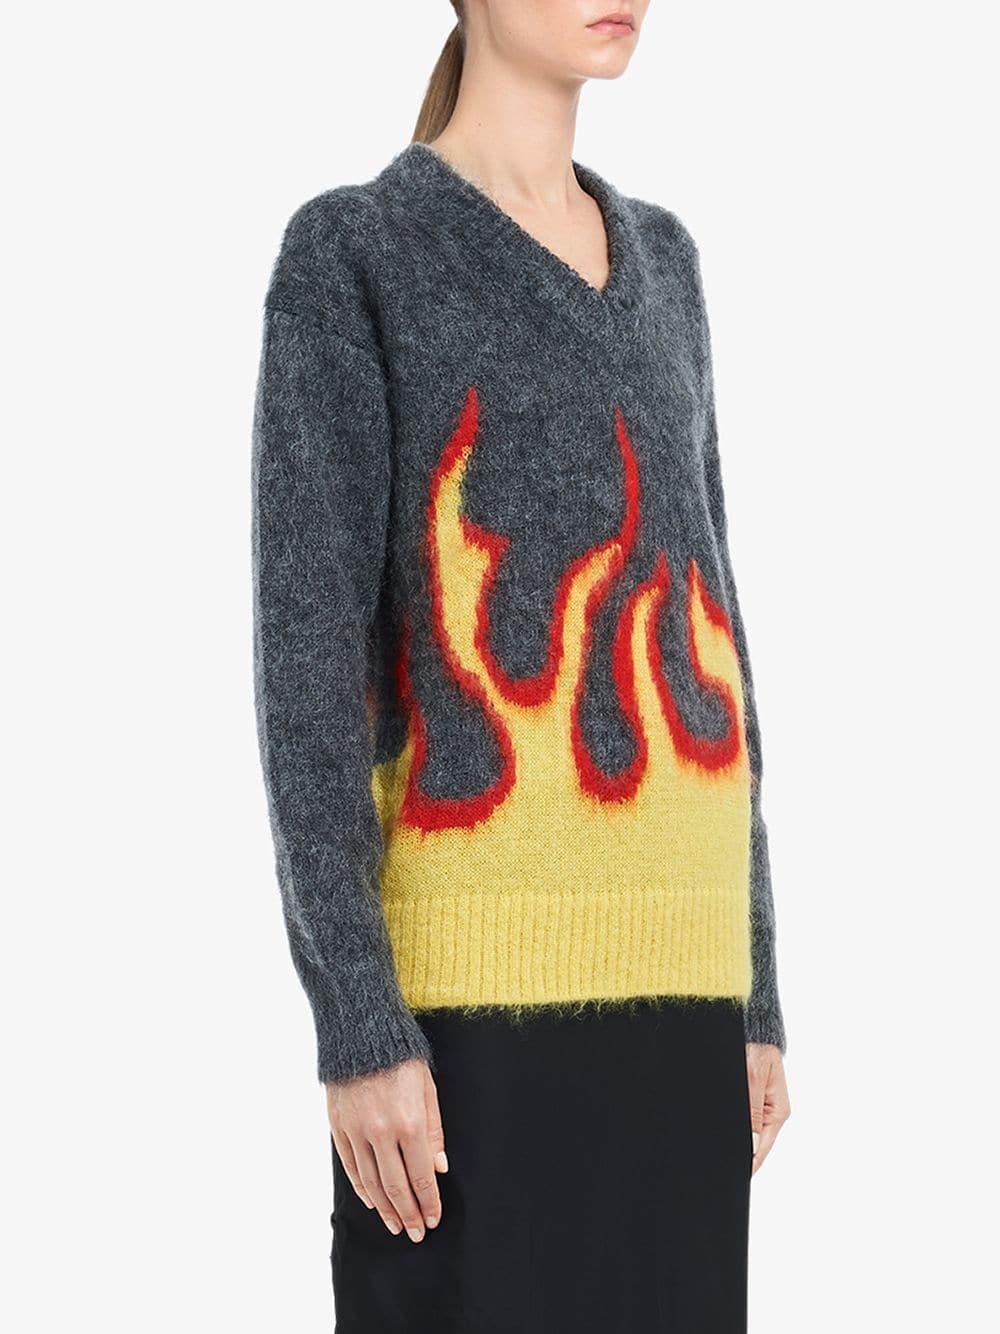 Prada Flame Sweater Hot Sale, 52% OFF | panni.com